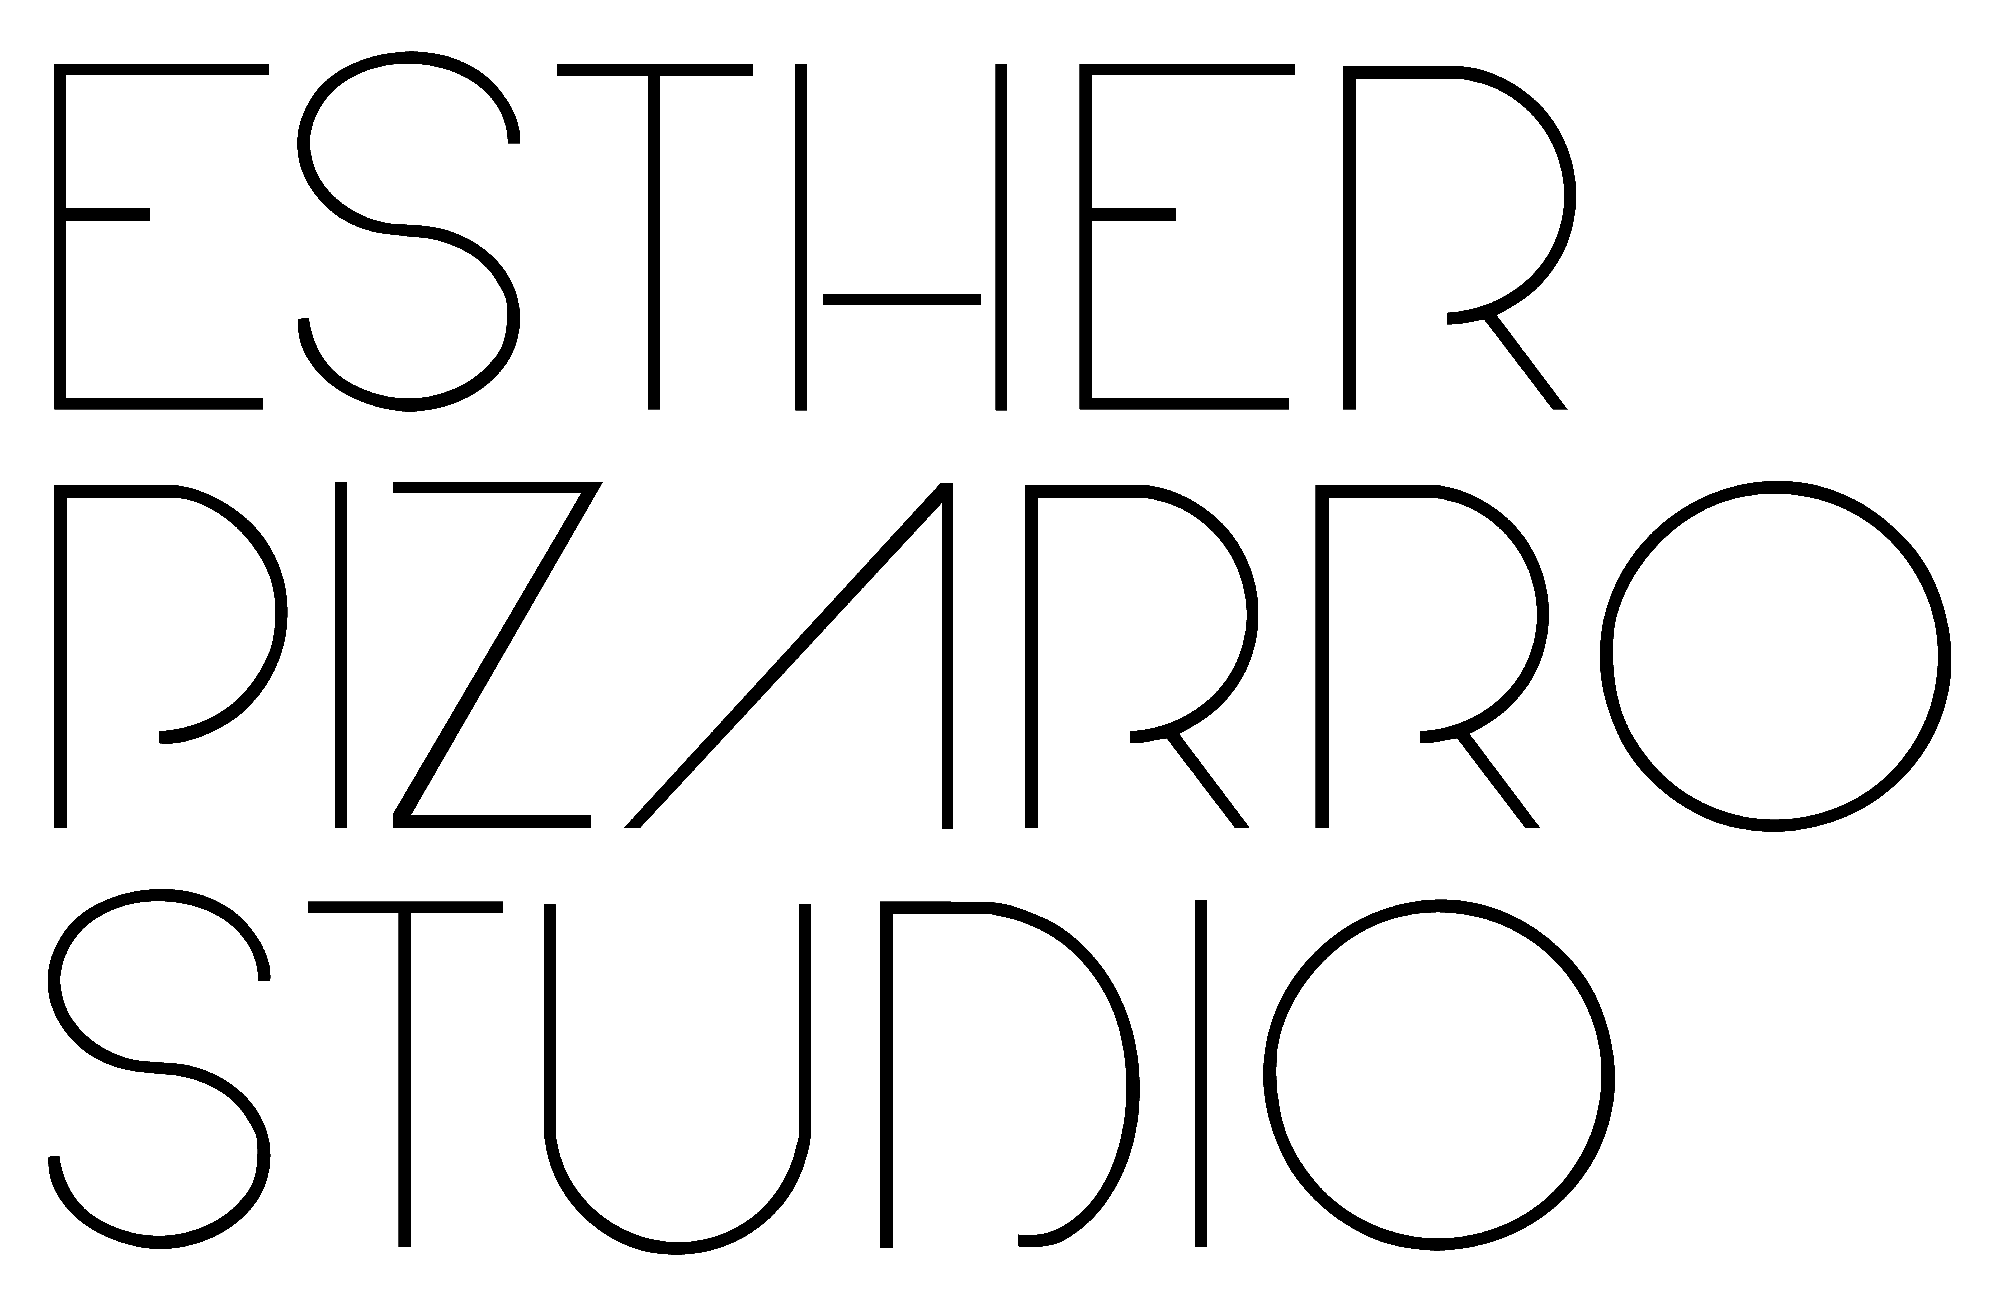 ESTHER PIZARRO STUDIO-EN